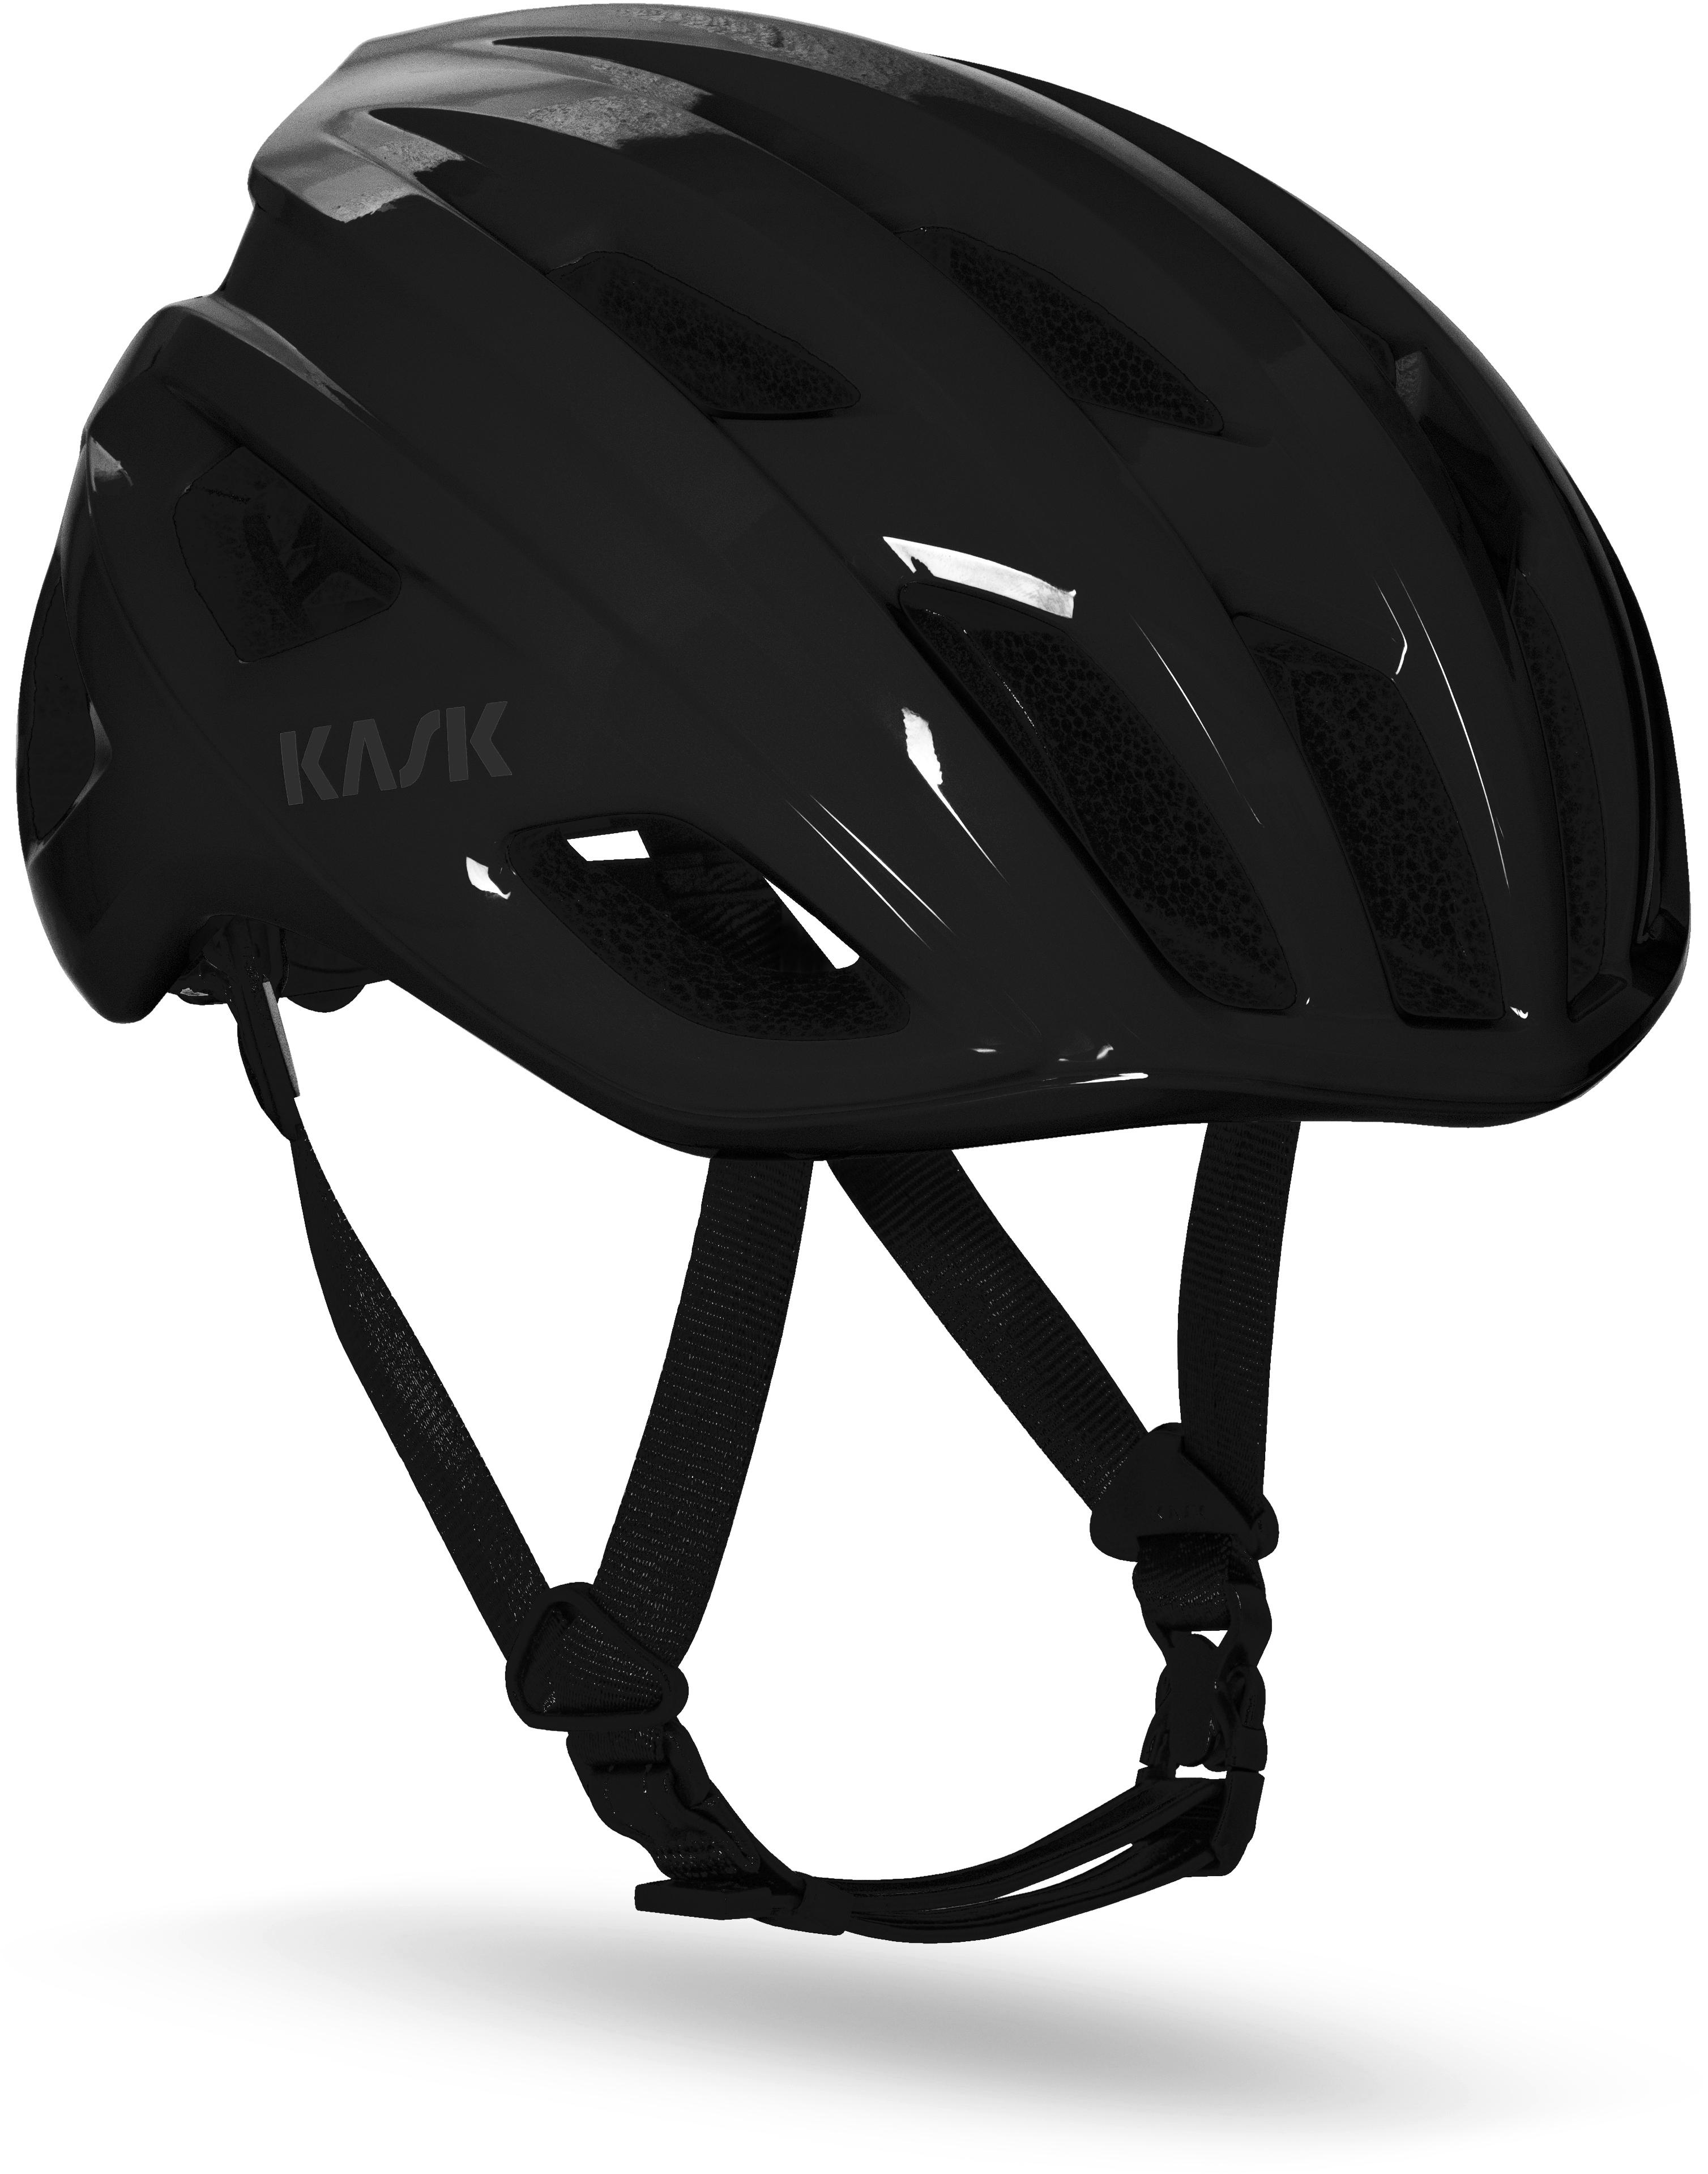 Kask Mojito Wg11 Road Helmet Black, Medium